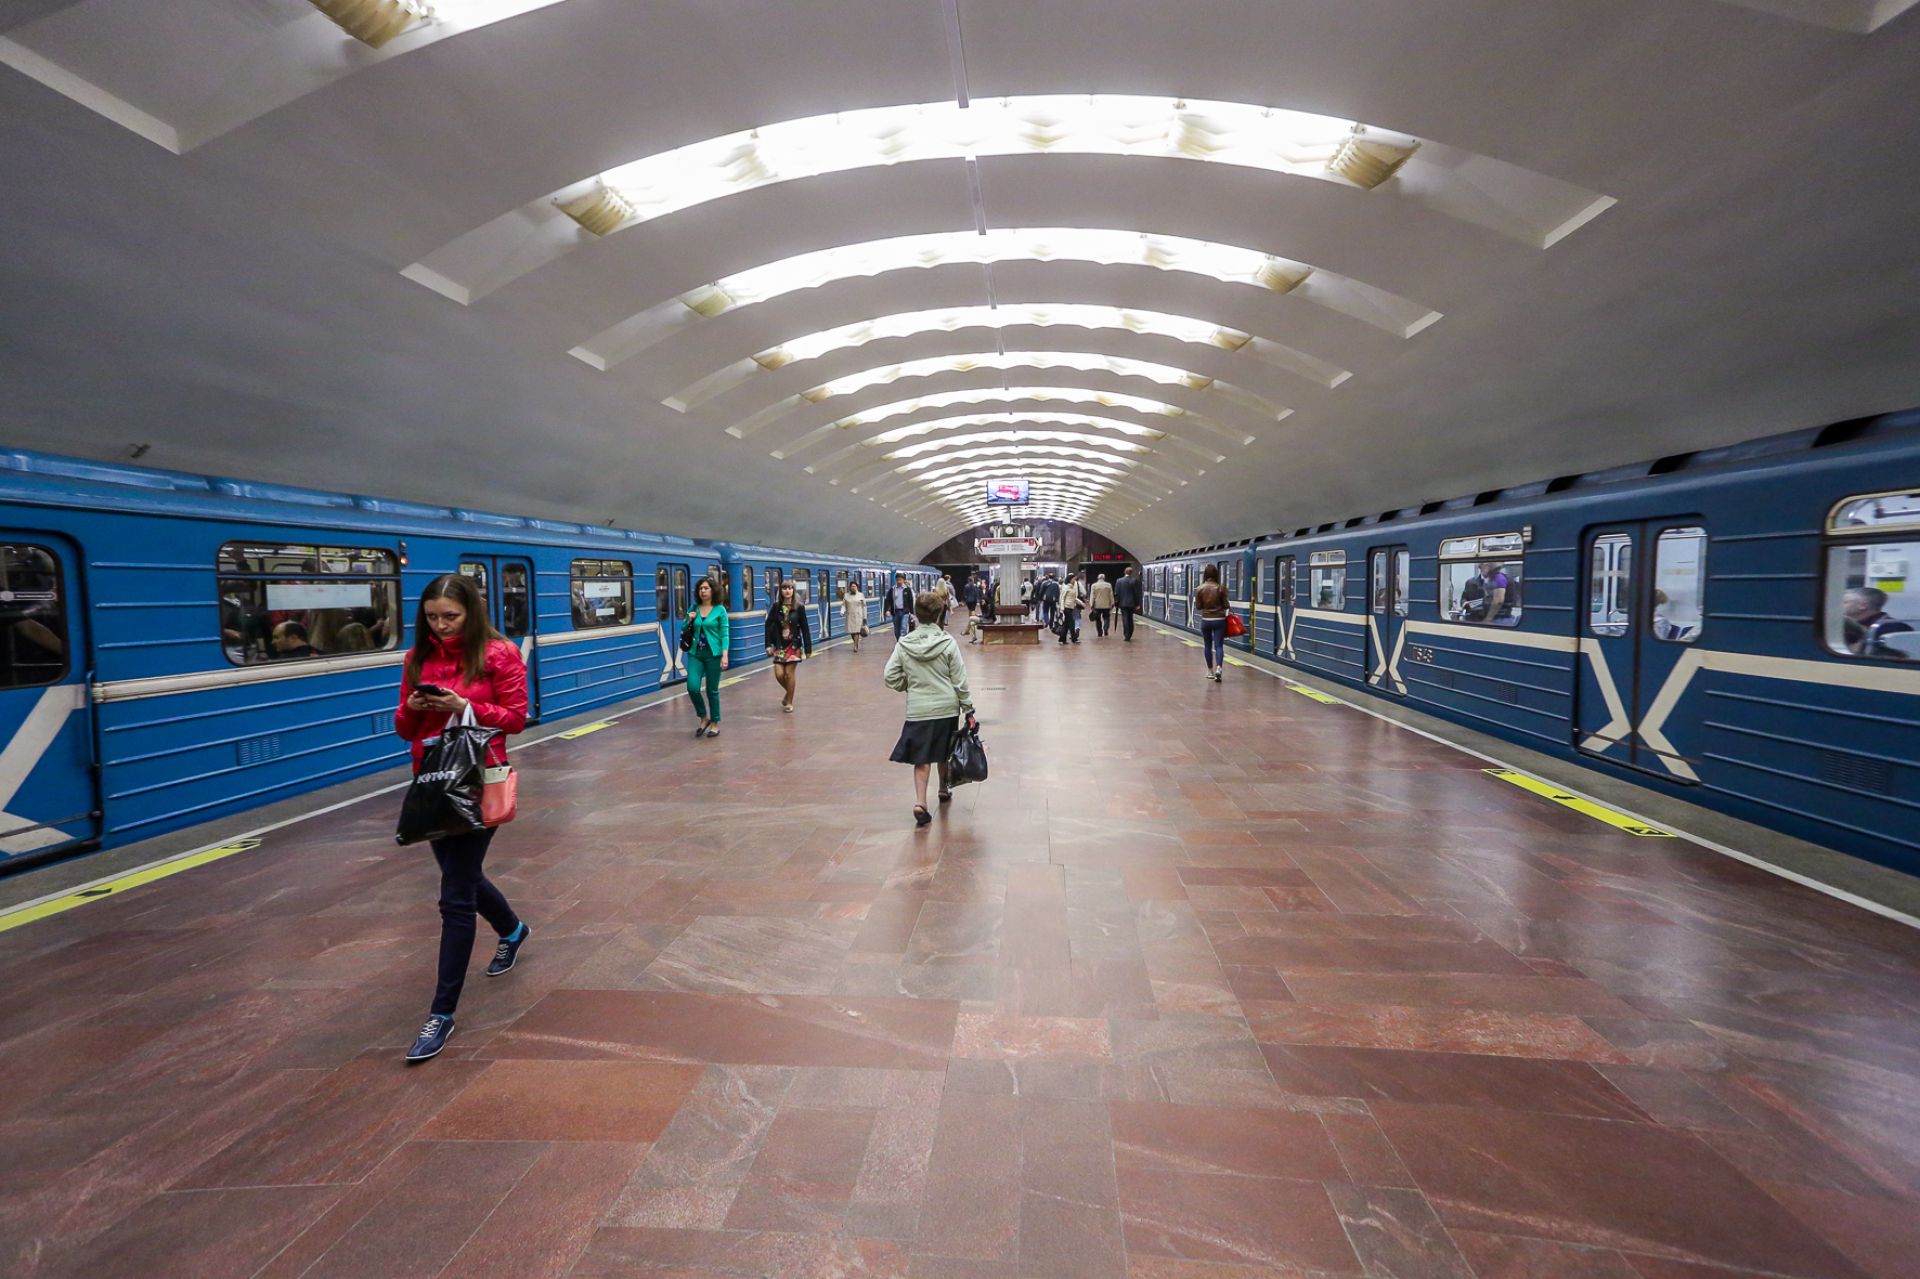 метро в новосибирске